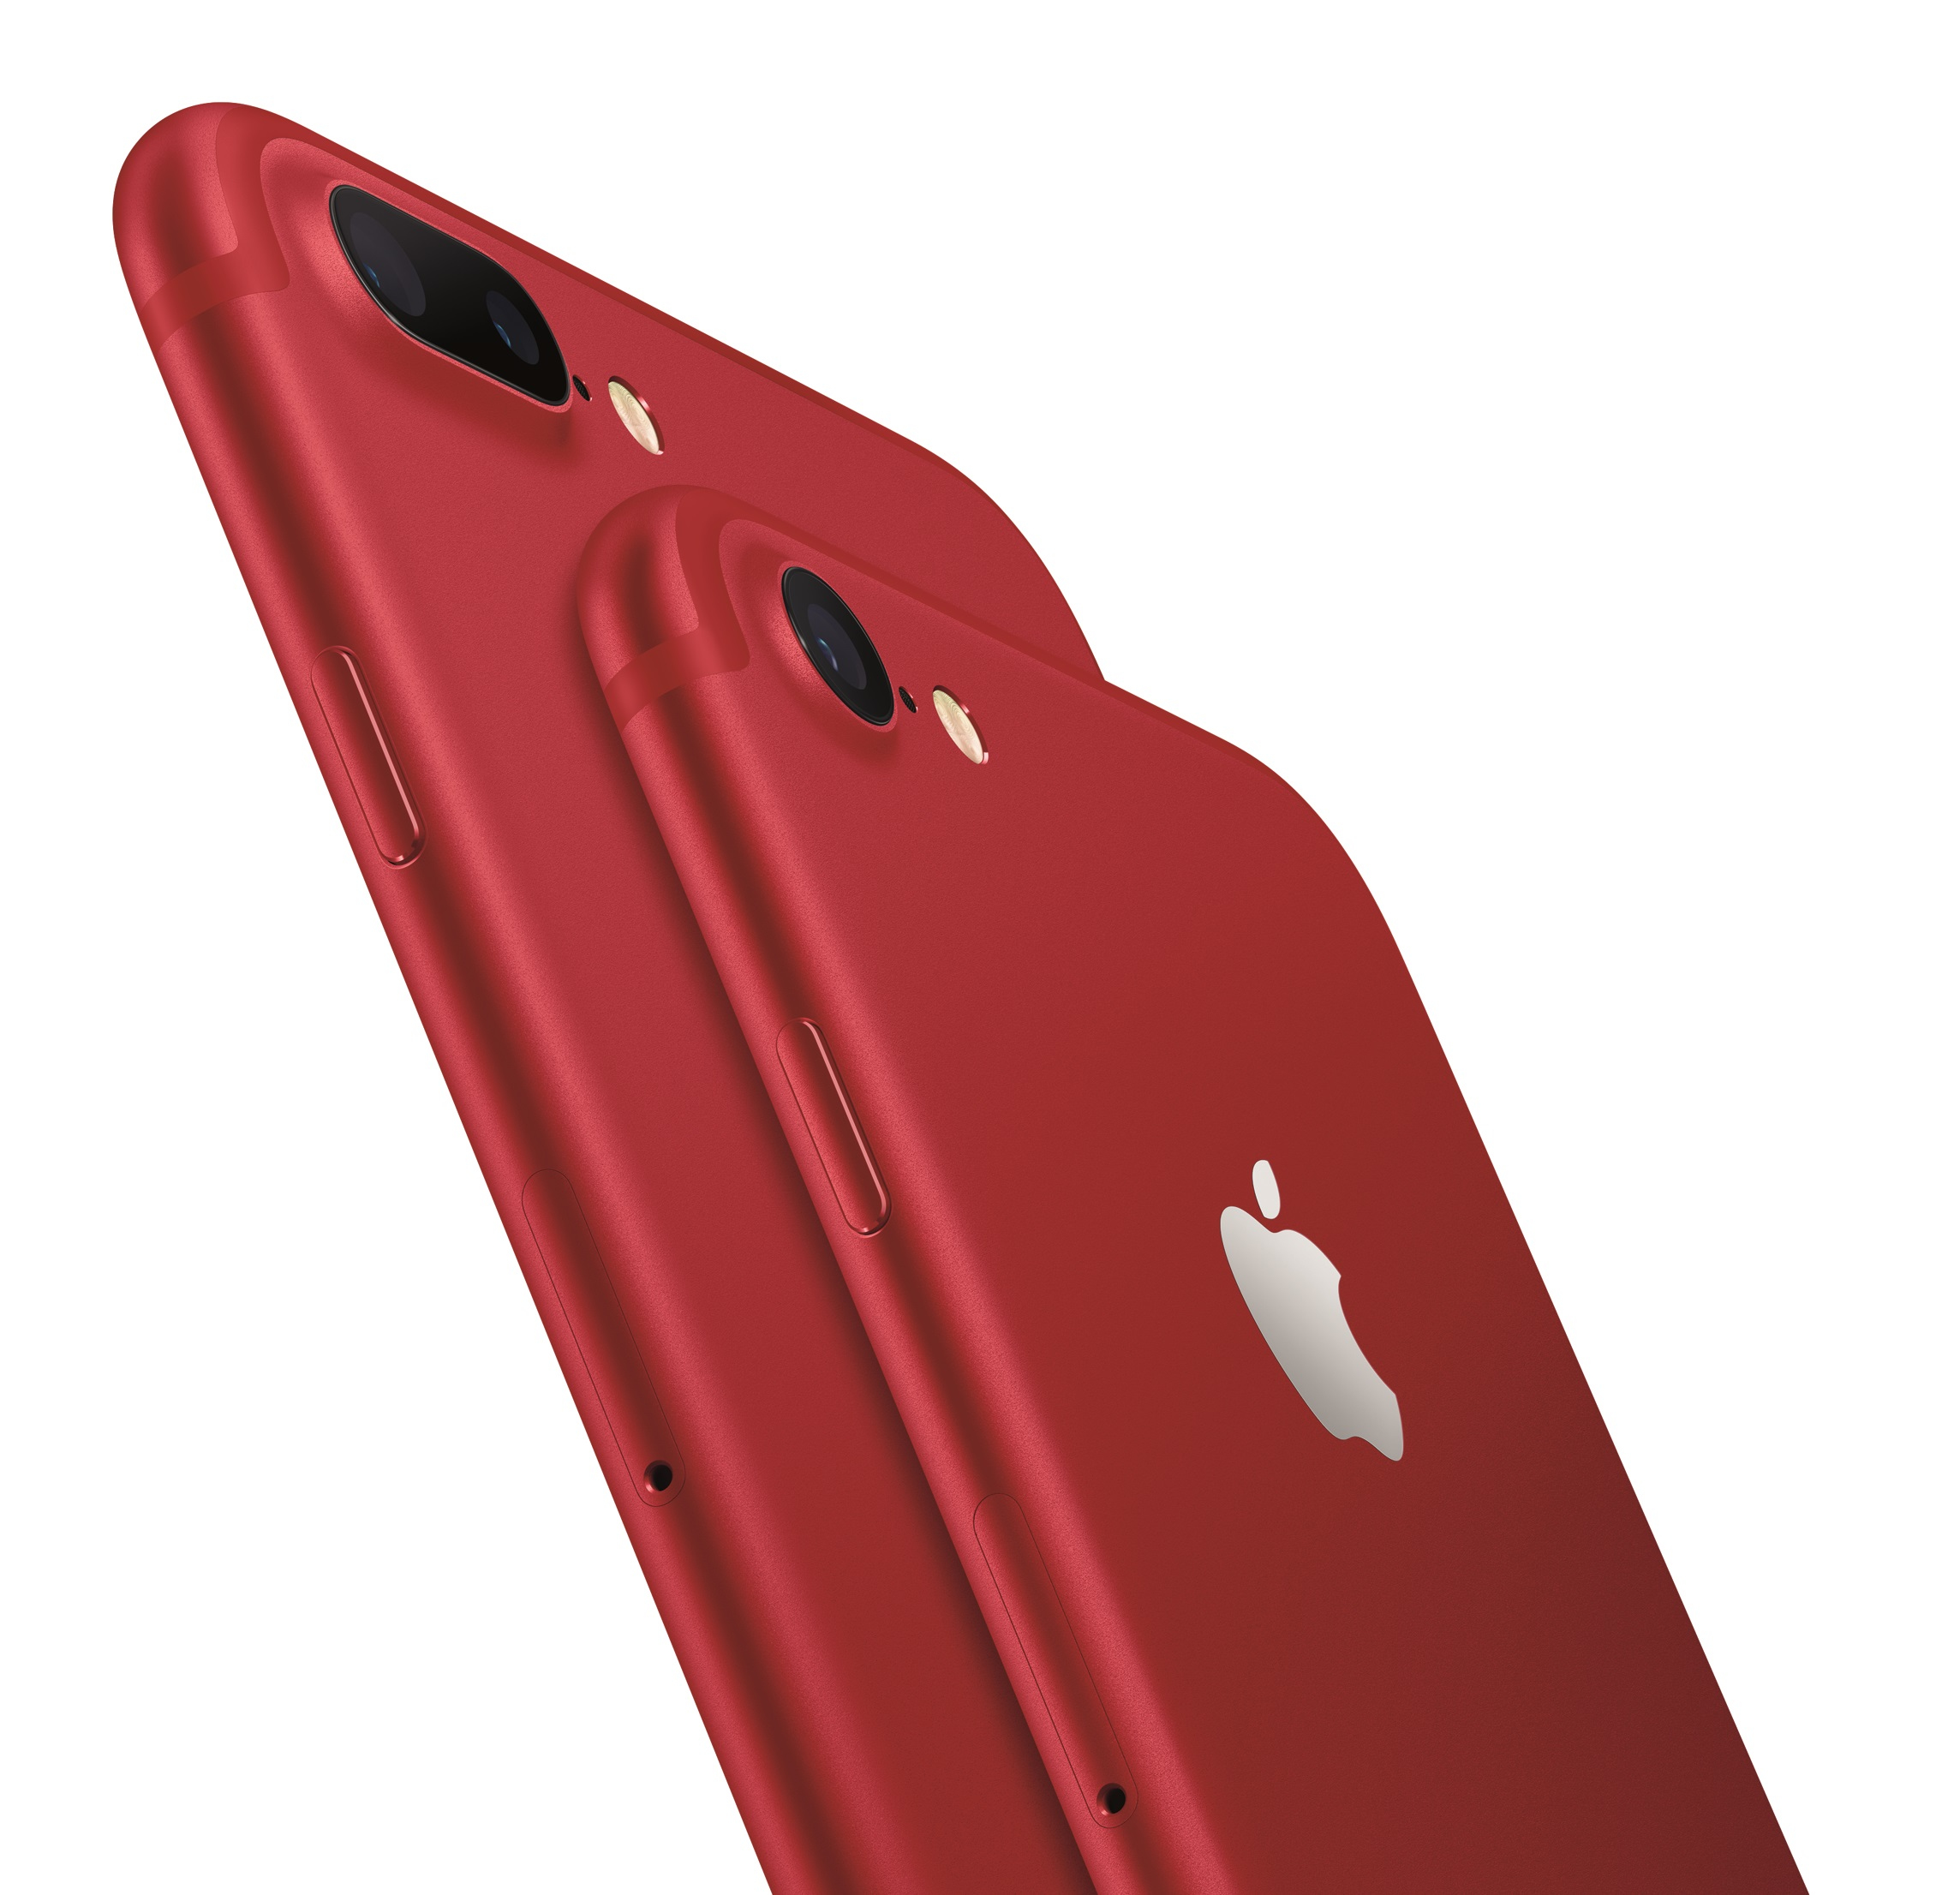 Mpqw2qla Apple Iphone 7 Plus 128gb Product Red Smartphone